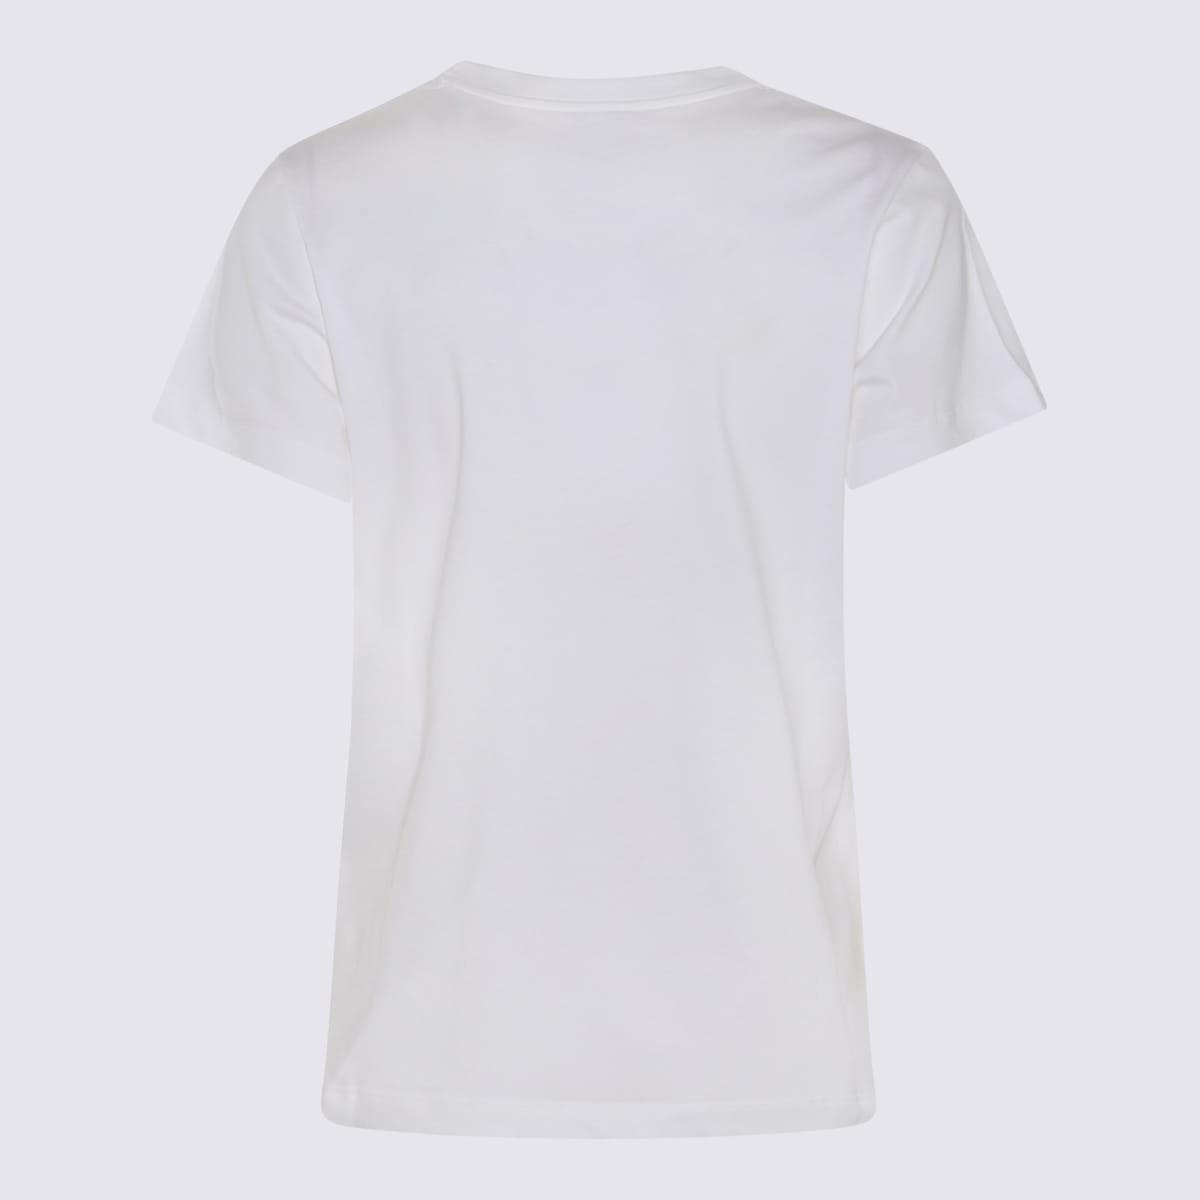 Shop Alexander Mcqueen White And Blue Cotton T-shirt